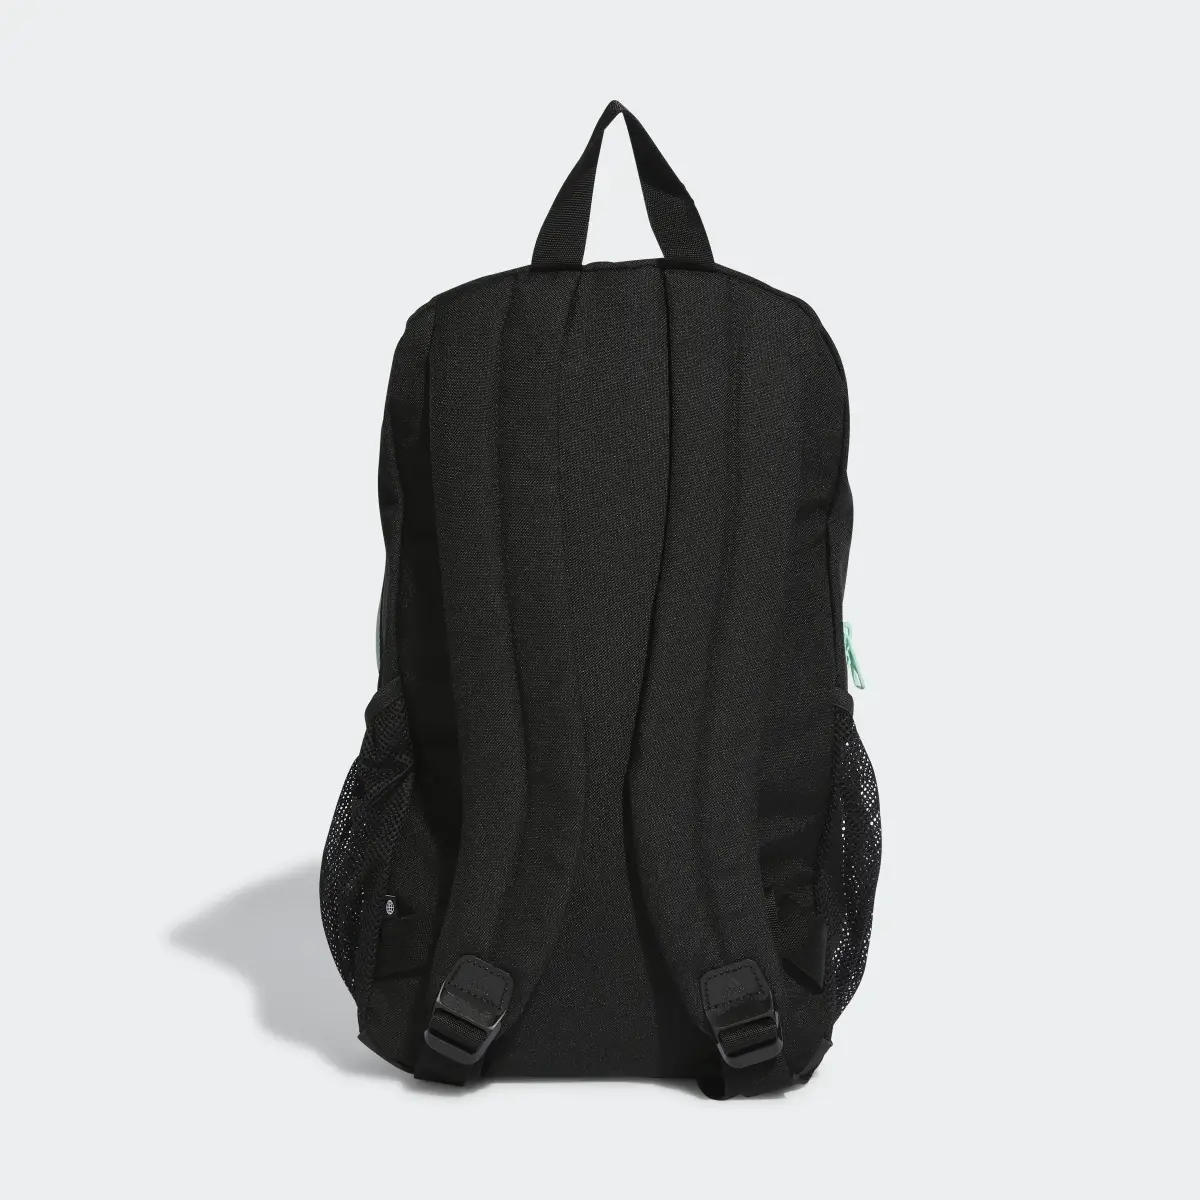 Adidas ARKD3 Backpack. 3